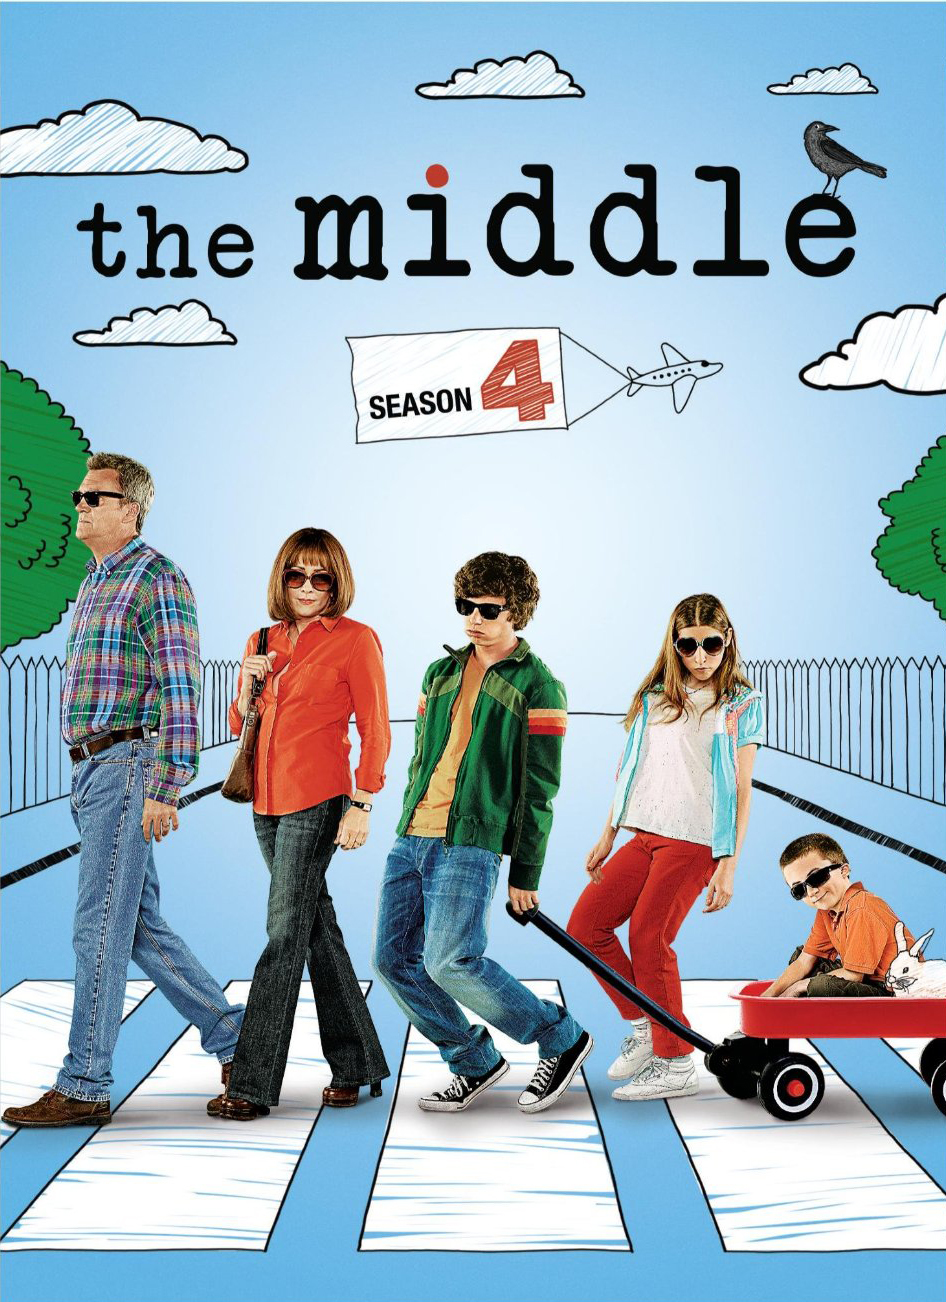 Middle, The: Season 4